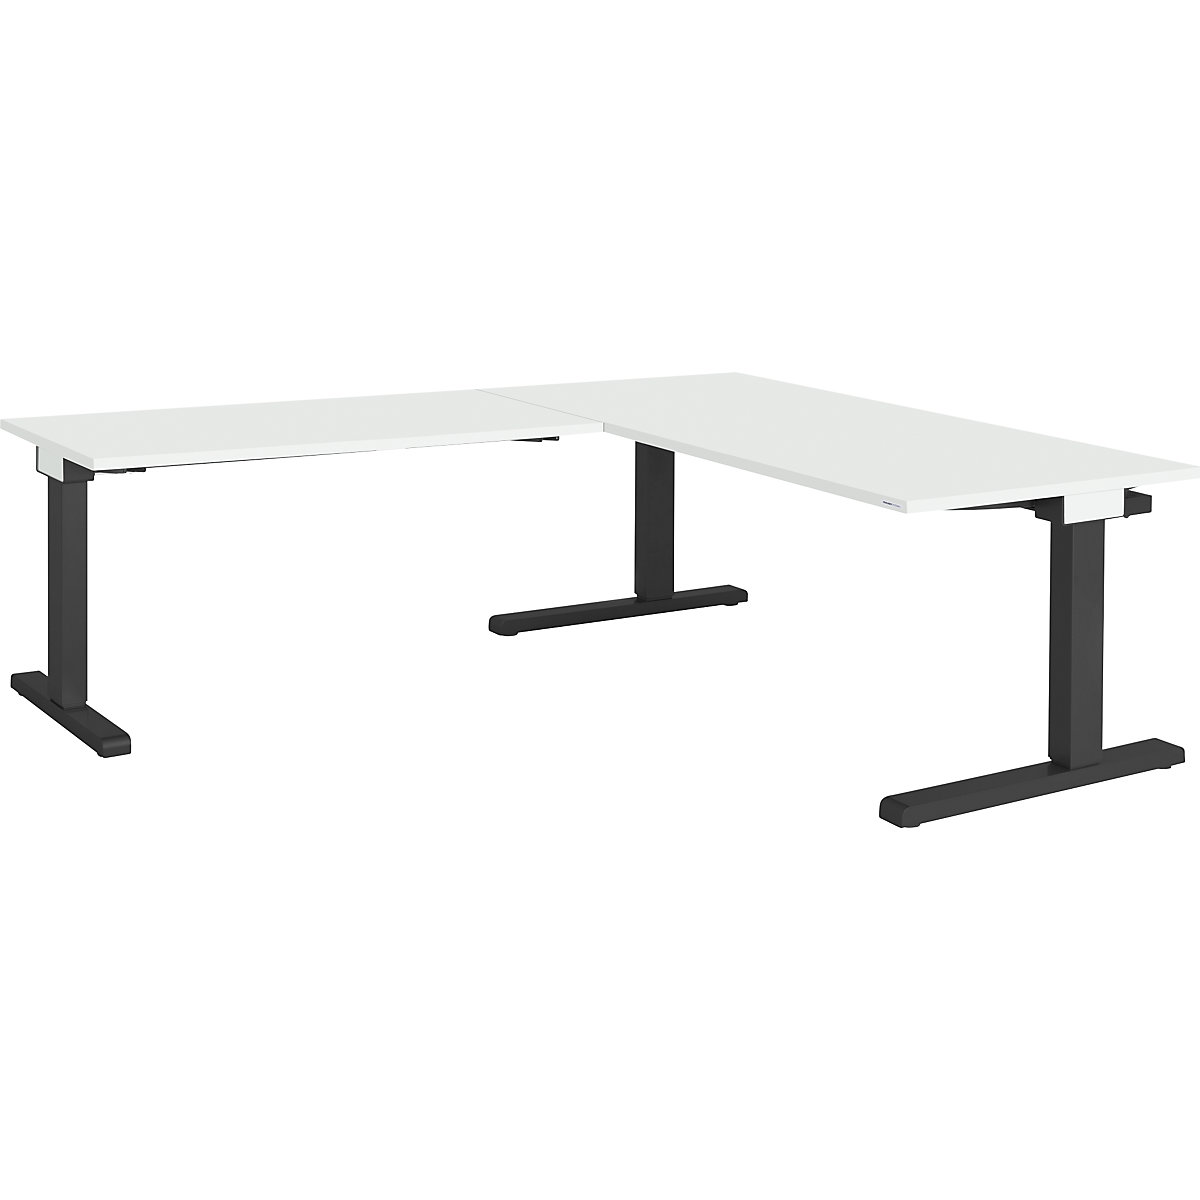 Desk, interlinked – mauser, WxD 1600 x 800 mm, angled extension on left (width 1200 mm), light grey top, charcoal frame-2